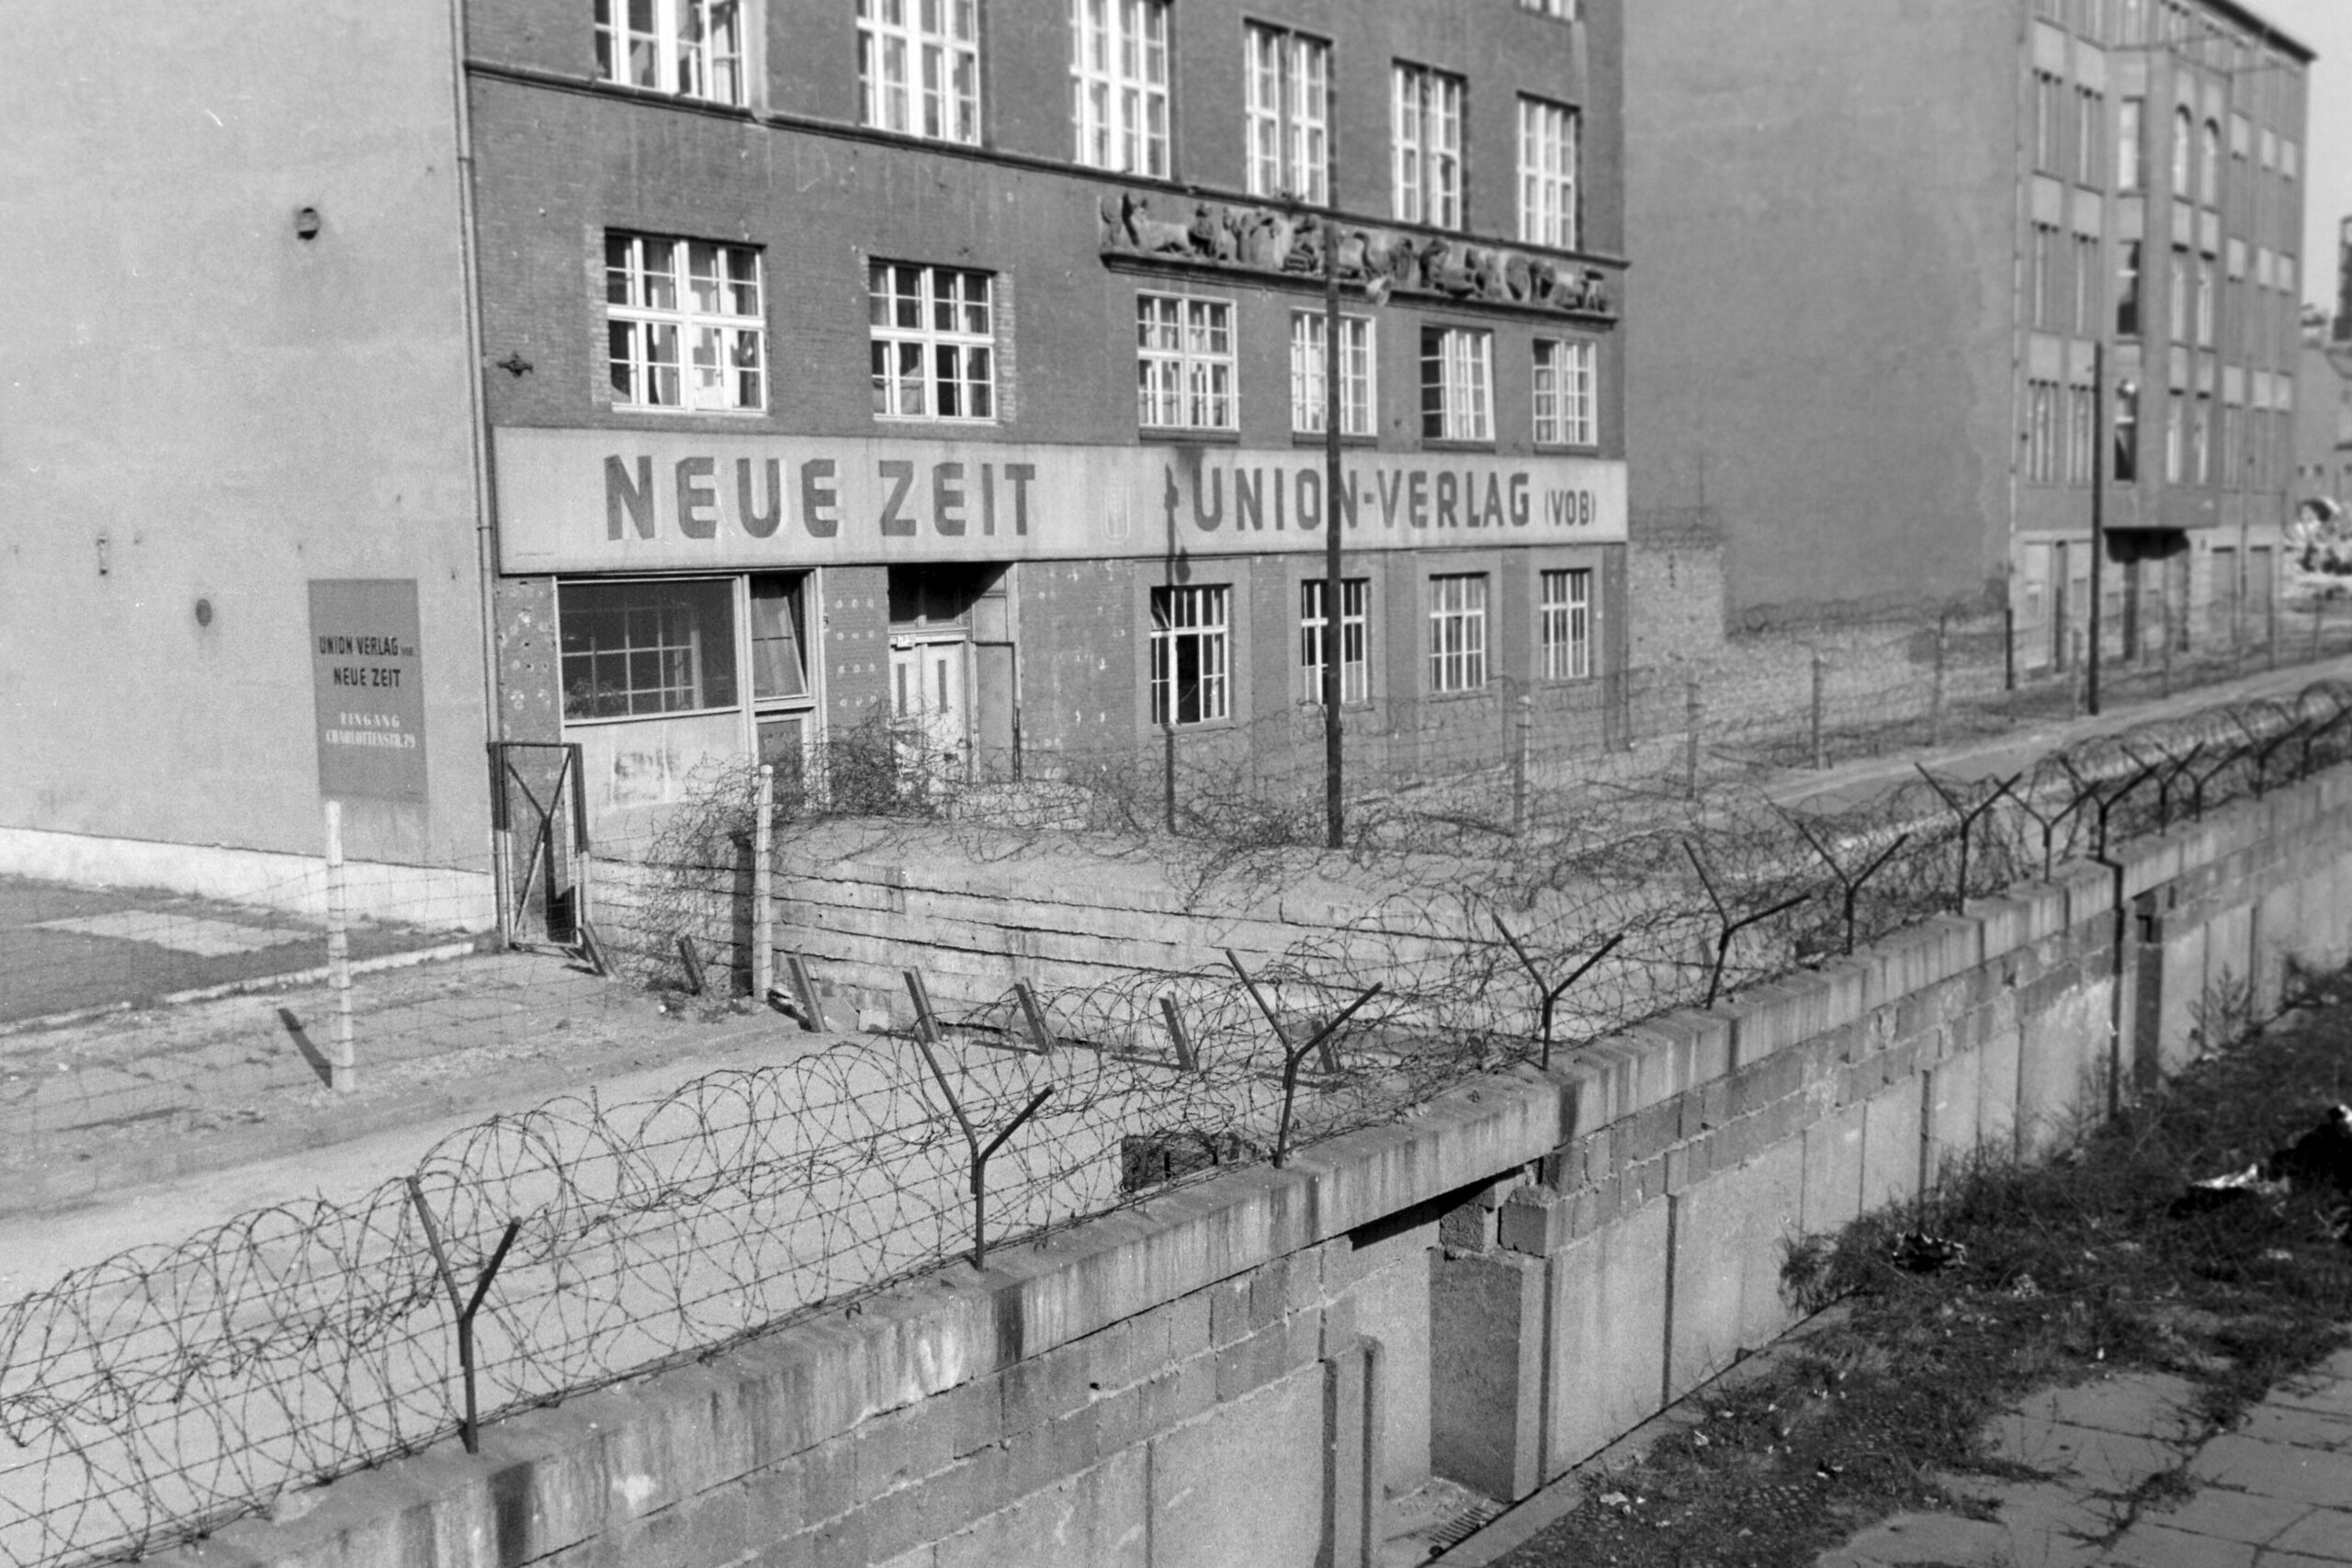 Gebäude des Union Verlags an der Berliner Mauer, 1963. Foto: Imago/Erich Andres/United Archives